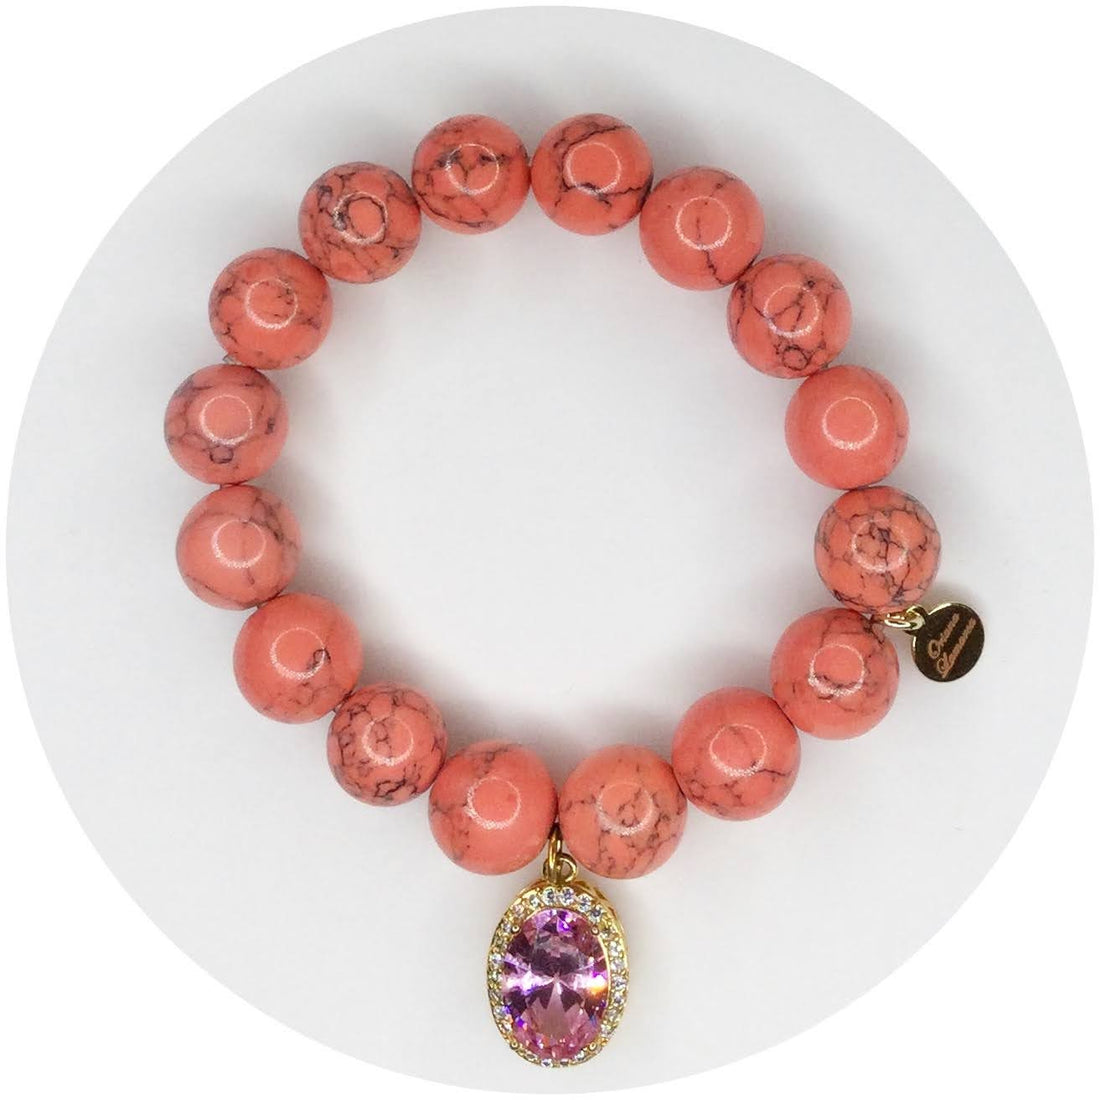 Pink and orange colada clay bead bracelet